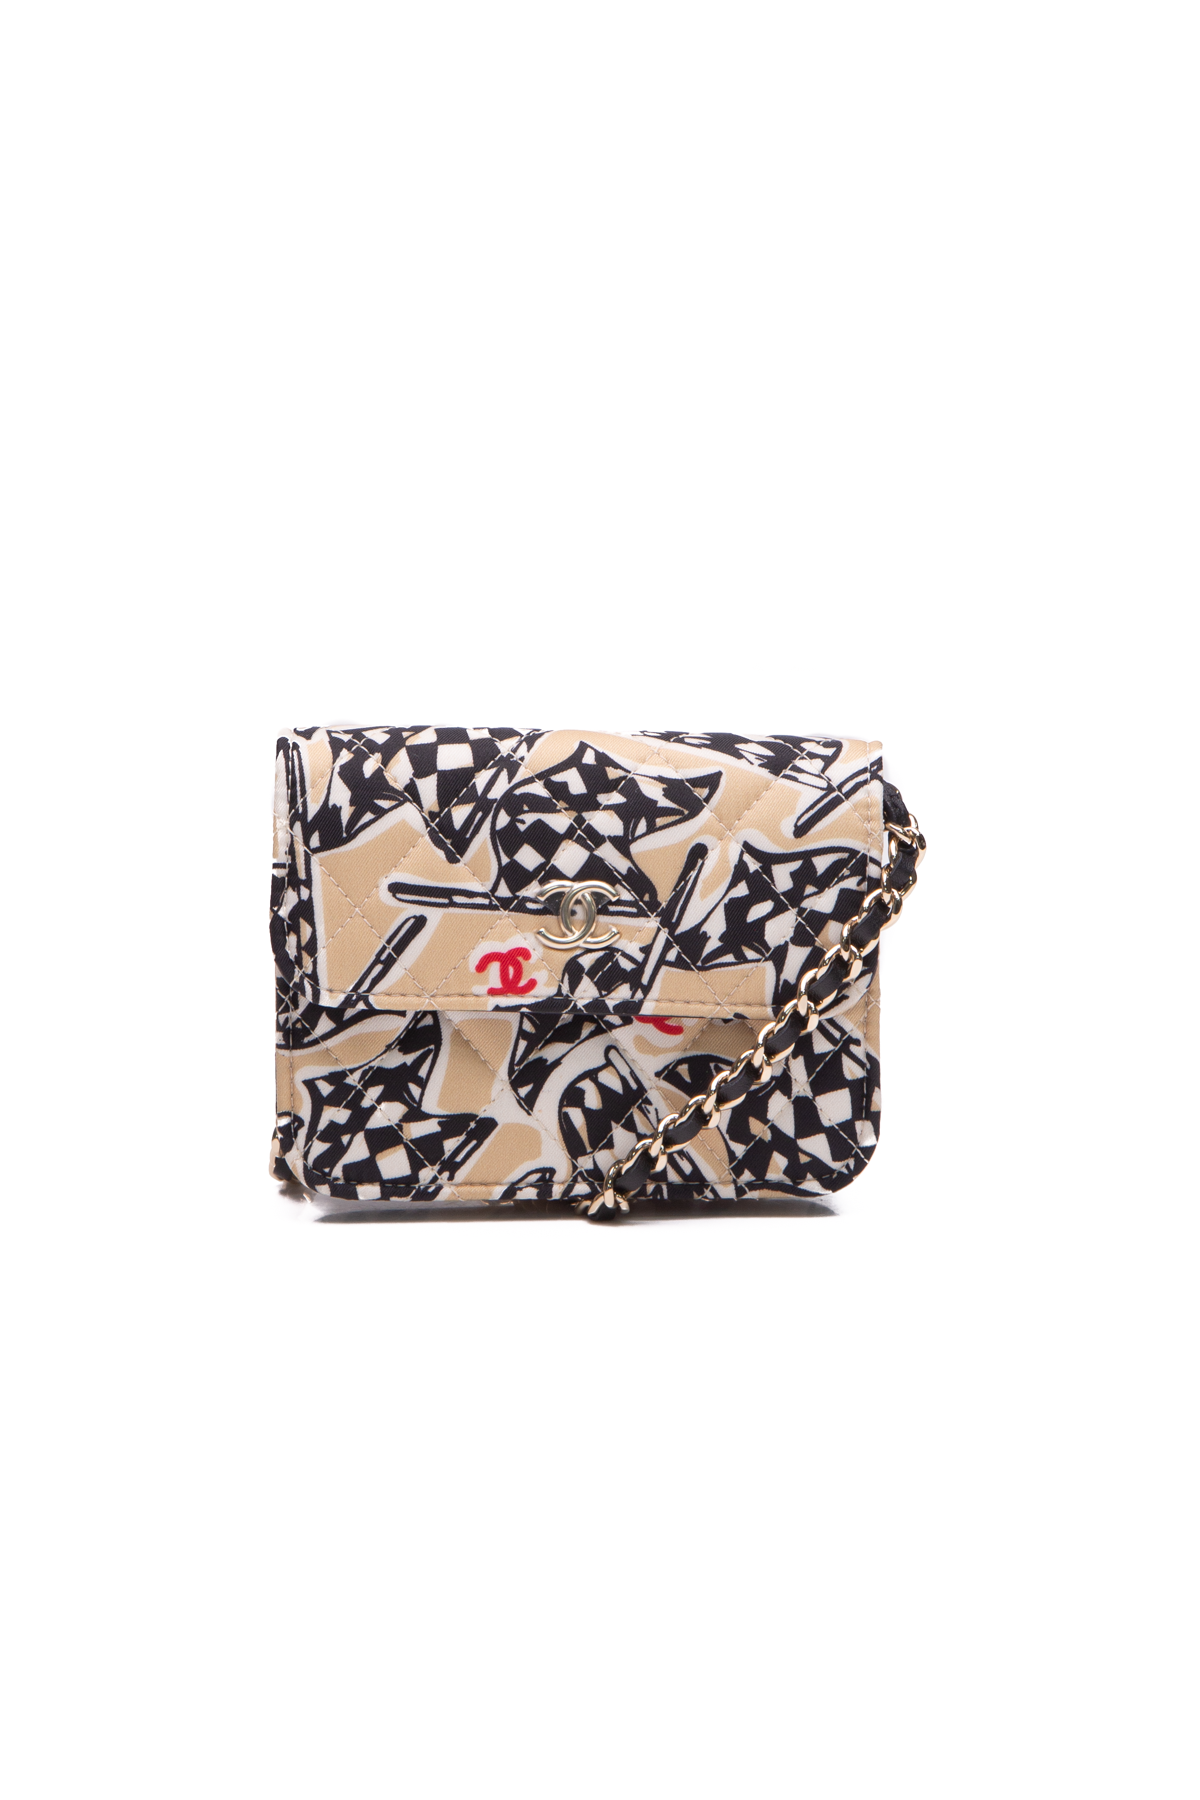 Buy Wholesale China Women Fashion Handbags Wallet Tote Bag